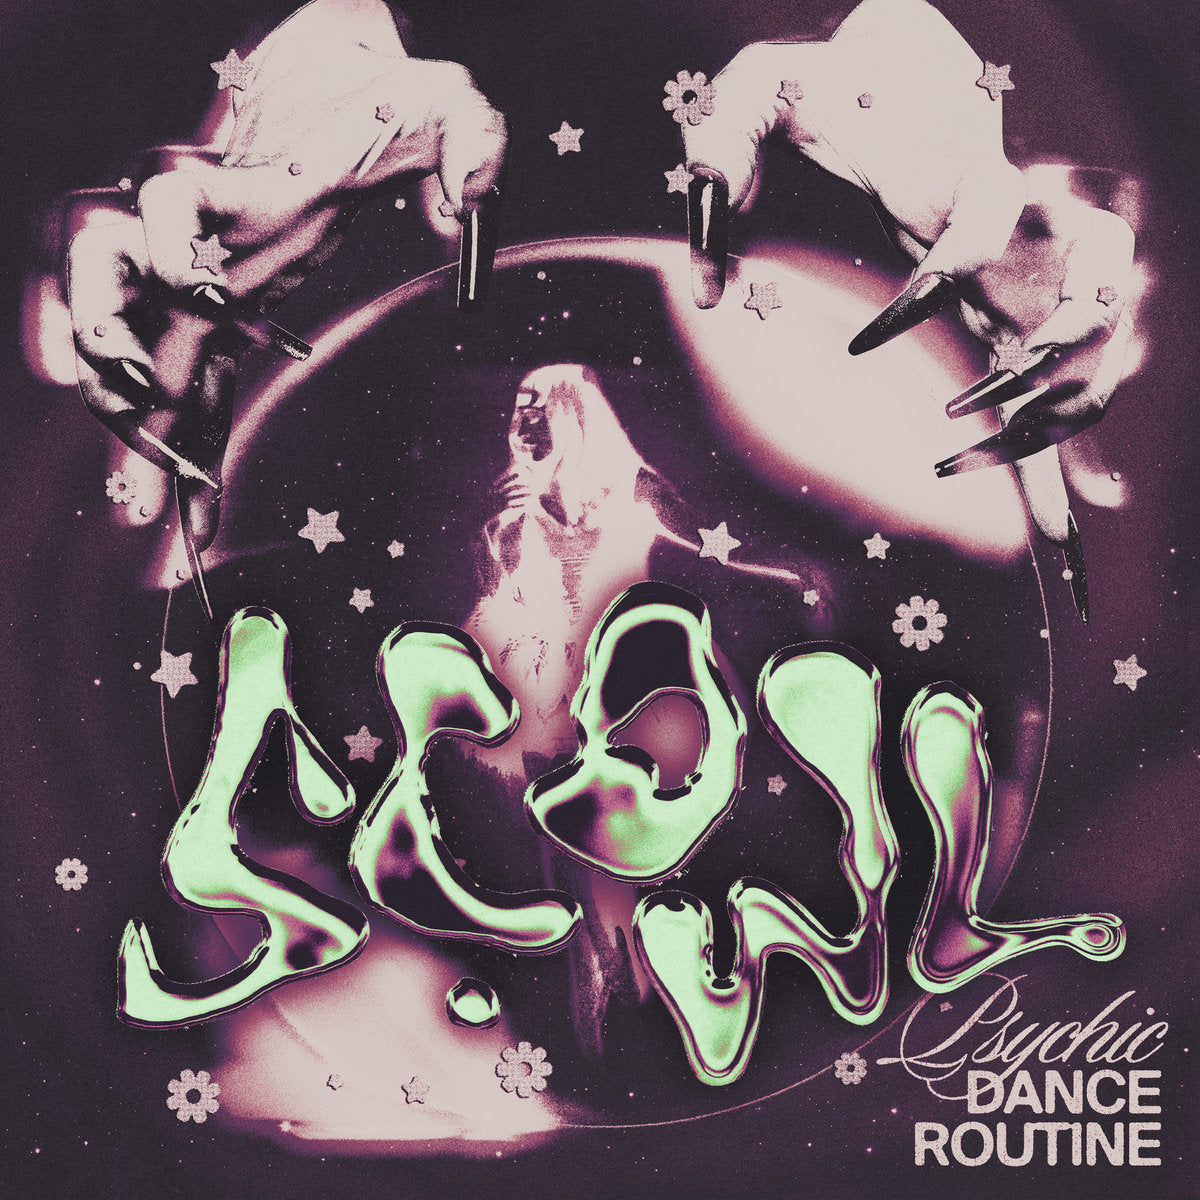 Scowl "Psychic Dance Routine" 12" Vinyl